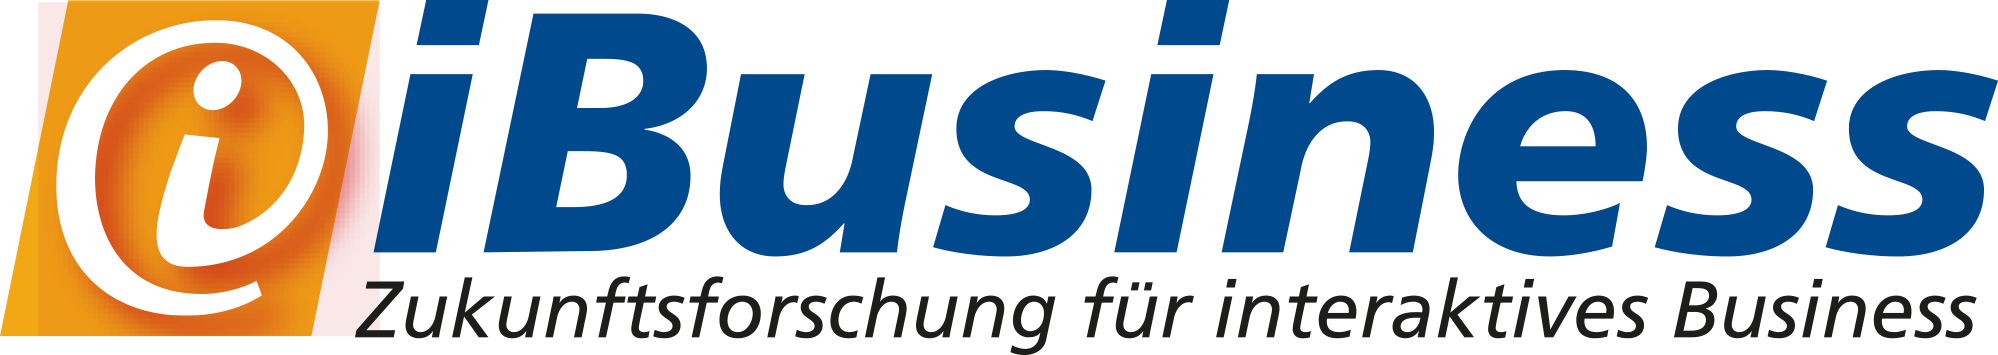 iBusiness logo